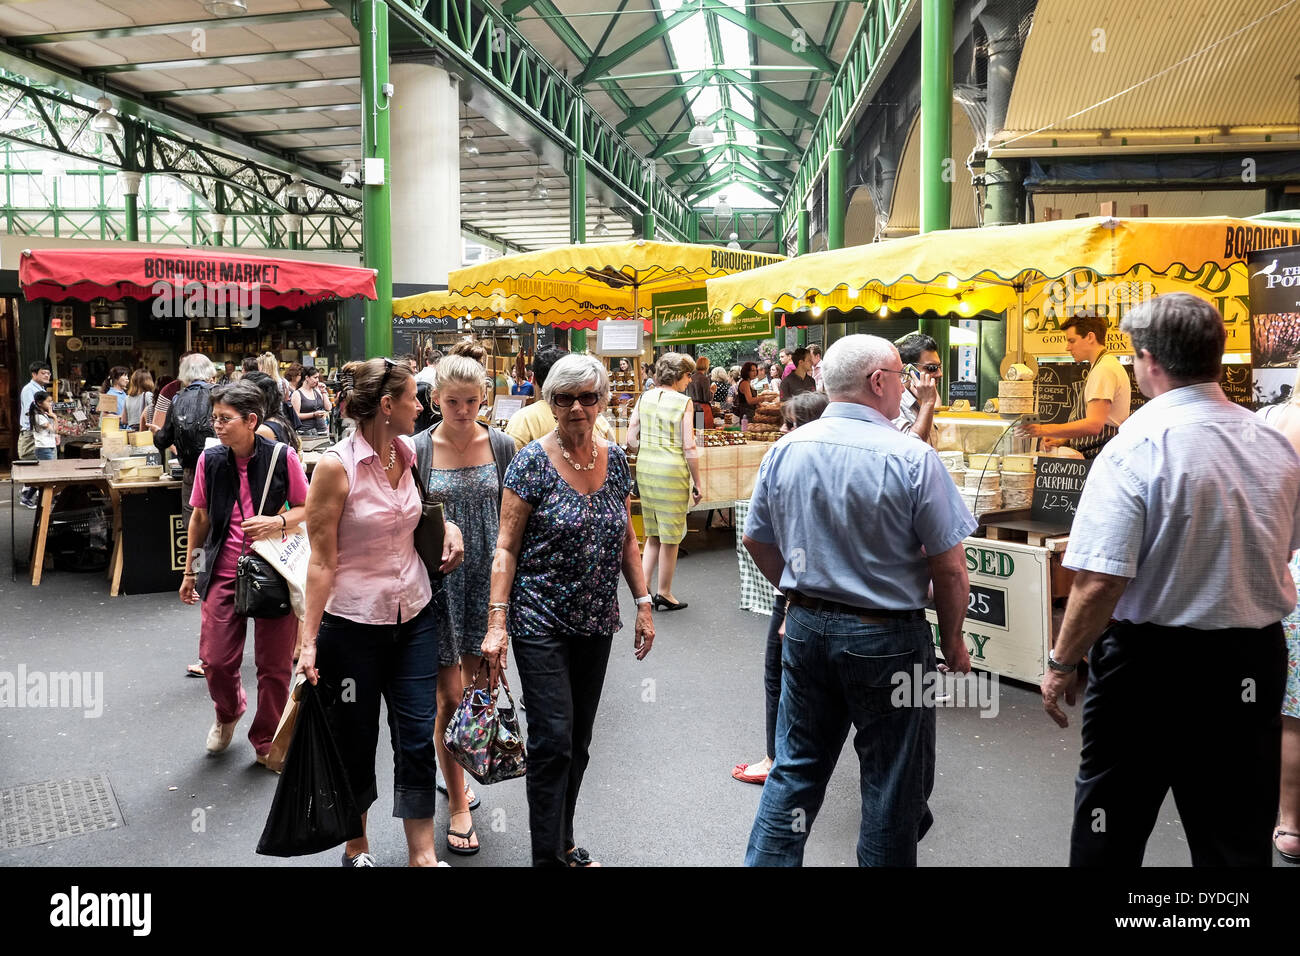 The interior of Borough Market in London. Stock Photo